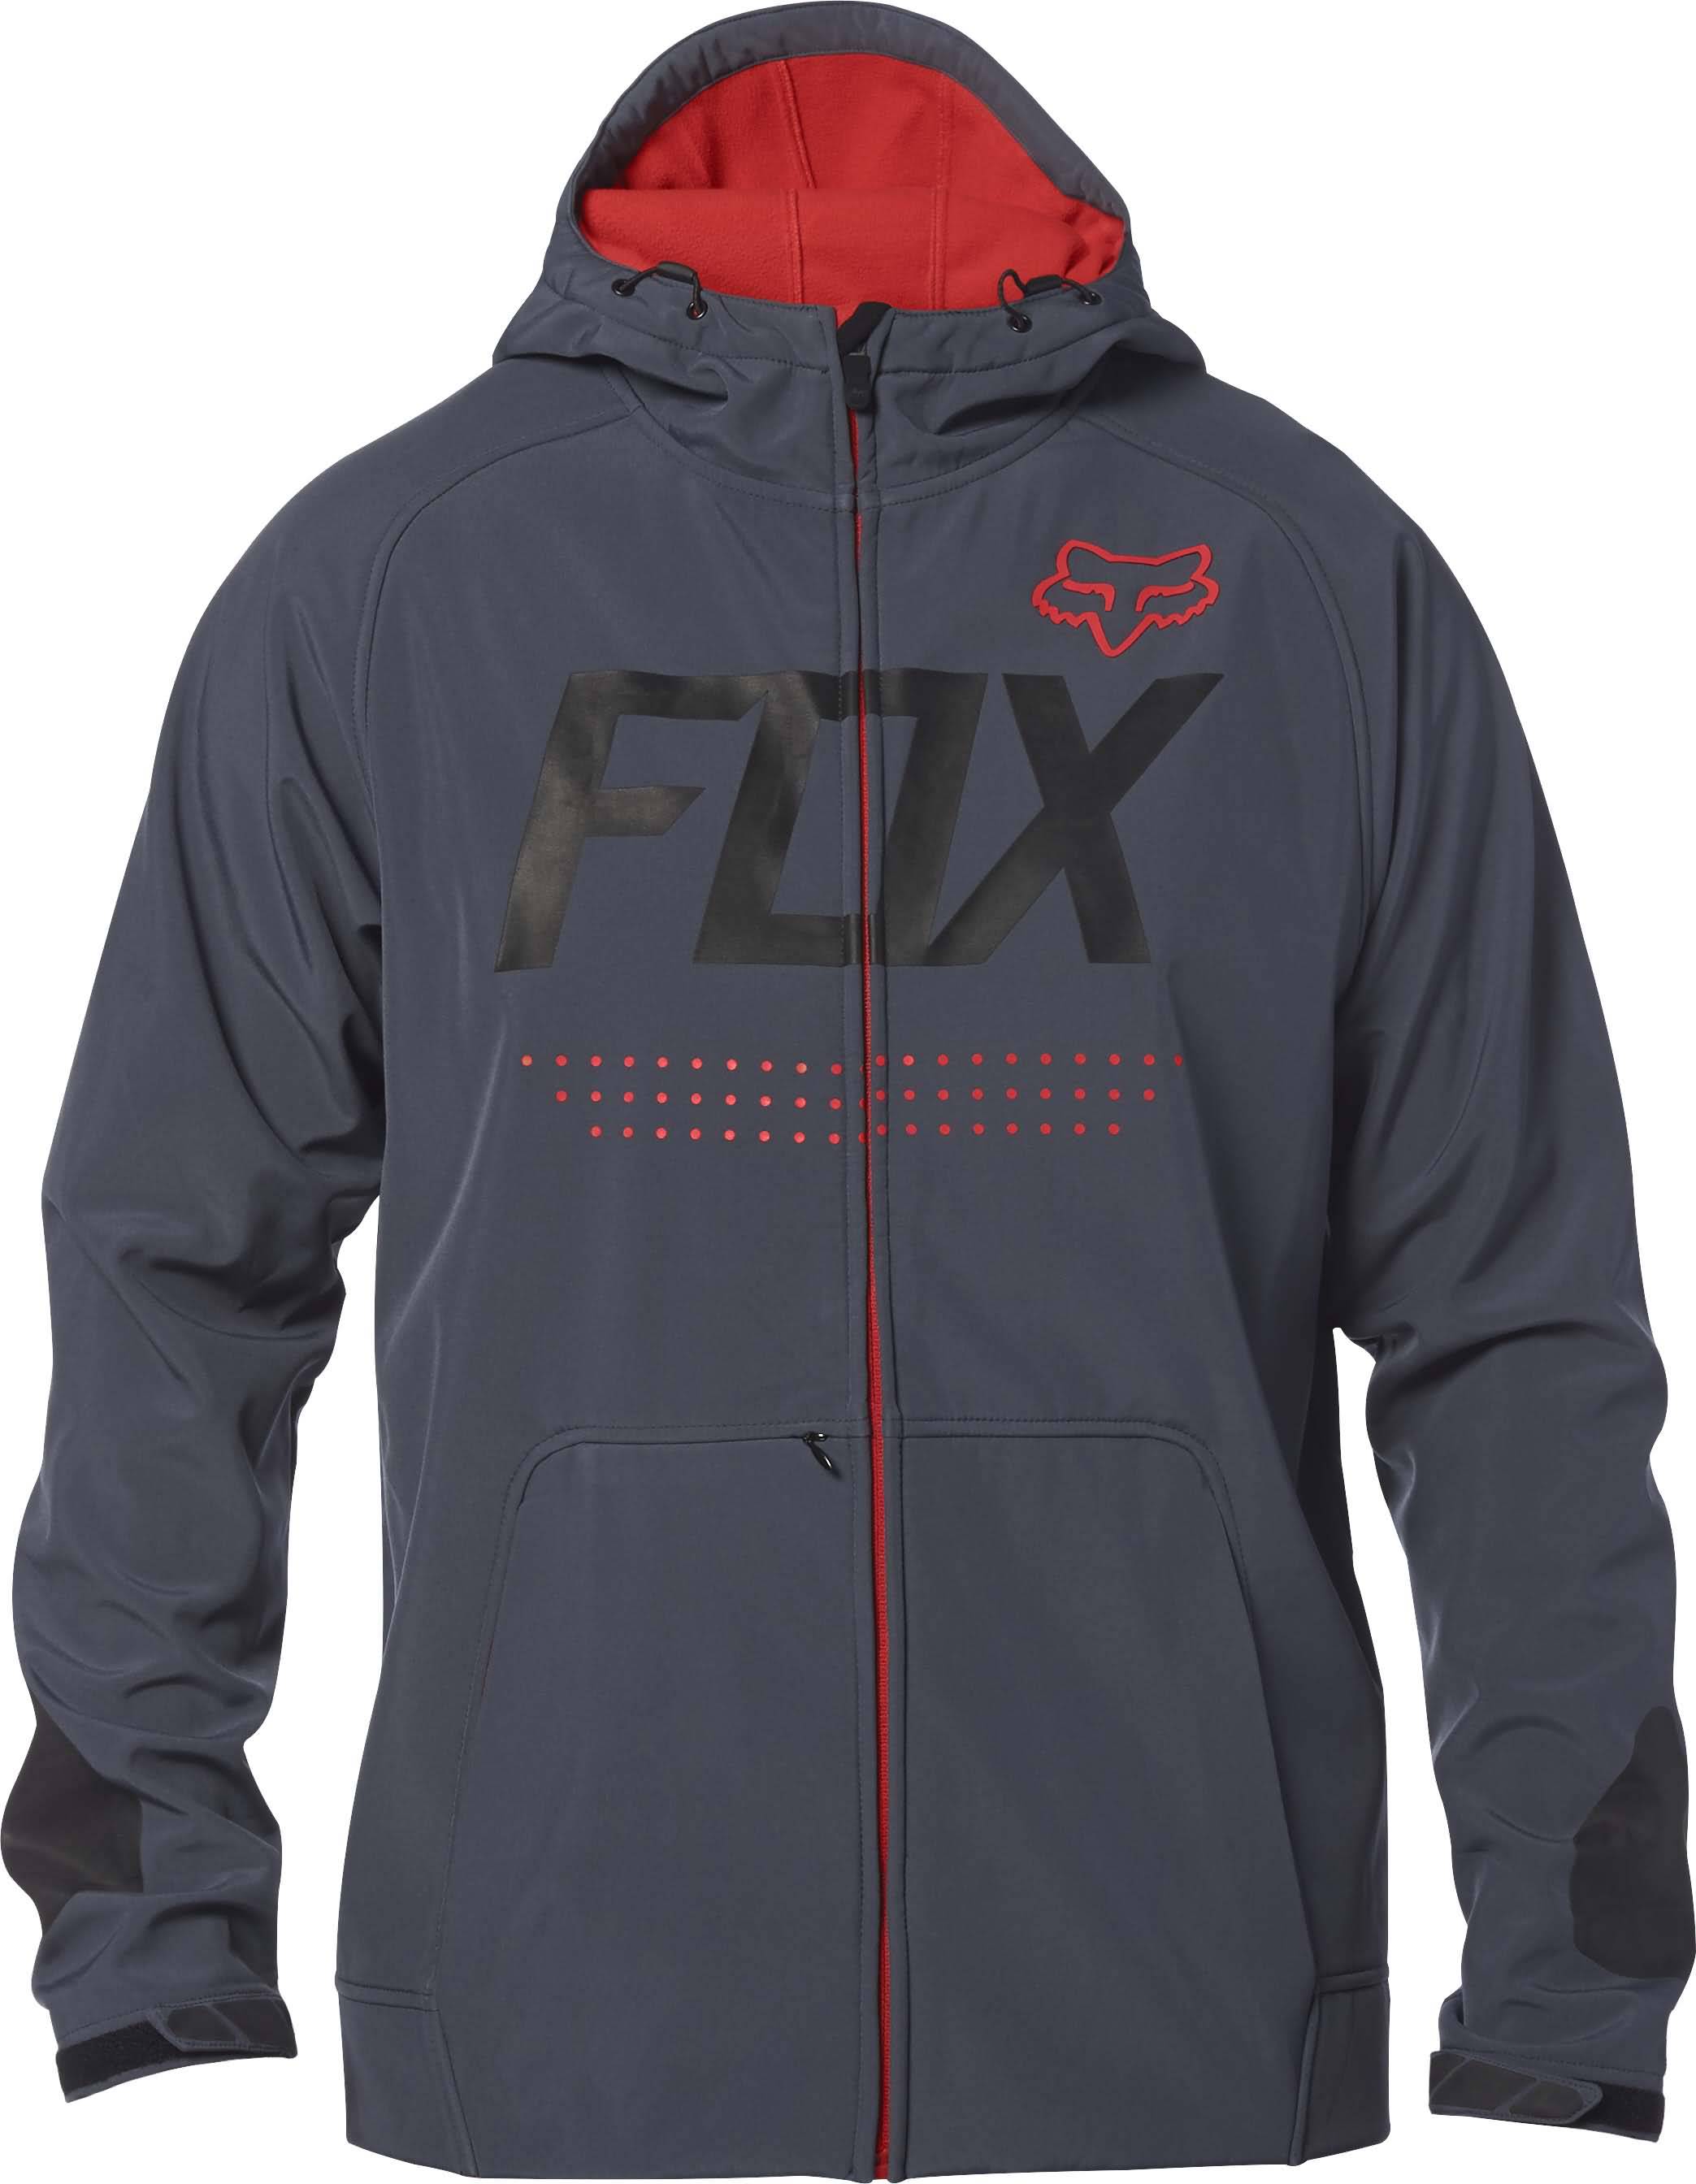 Fox Racing Fall 2016 Mens Flexair Outerwear Collection